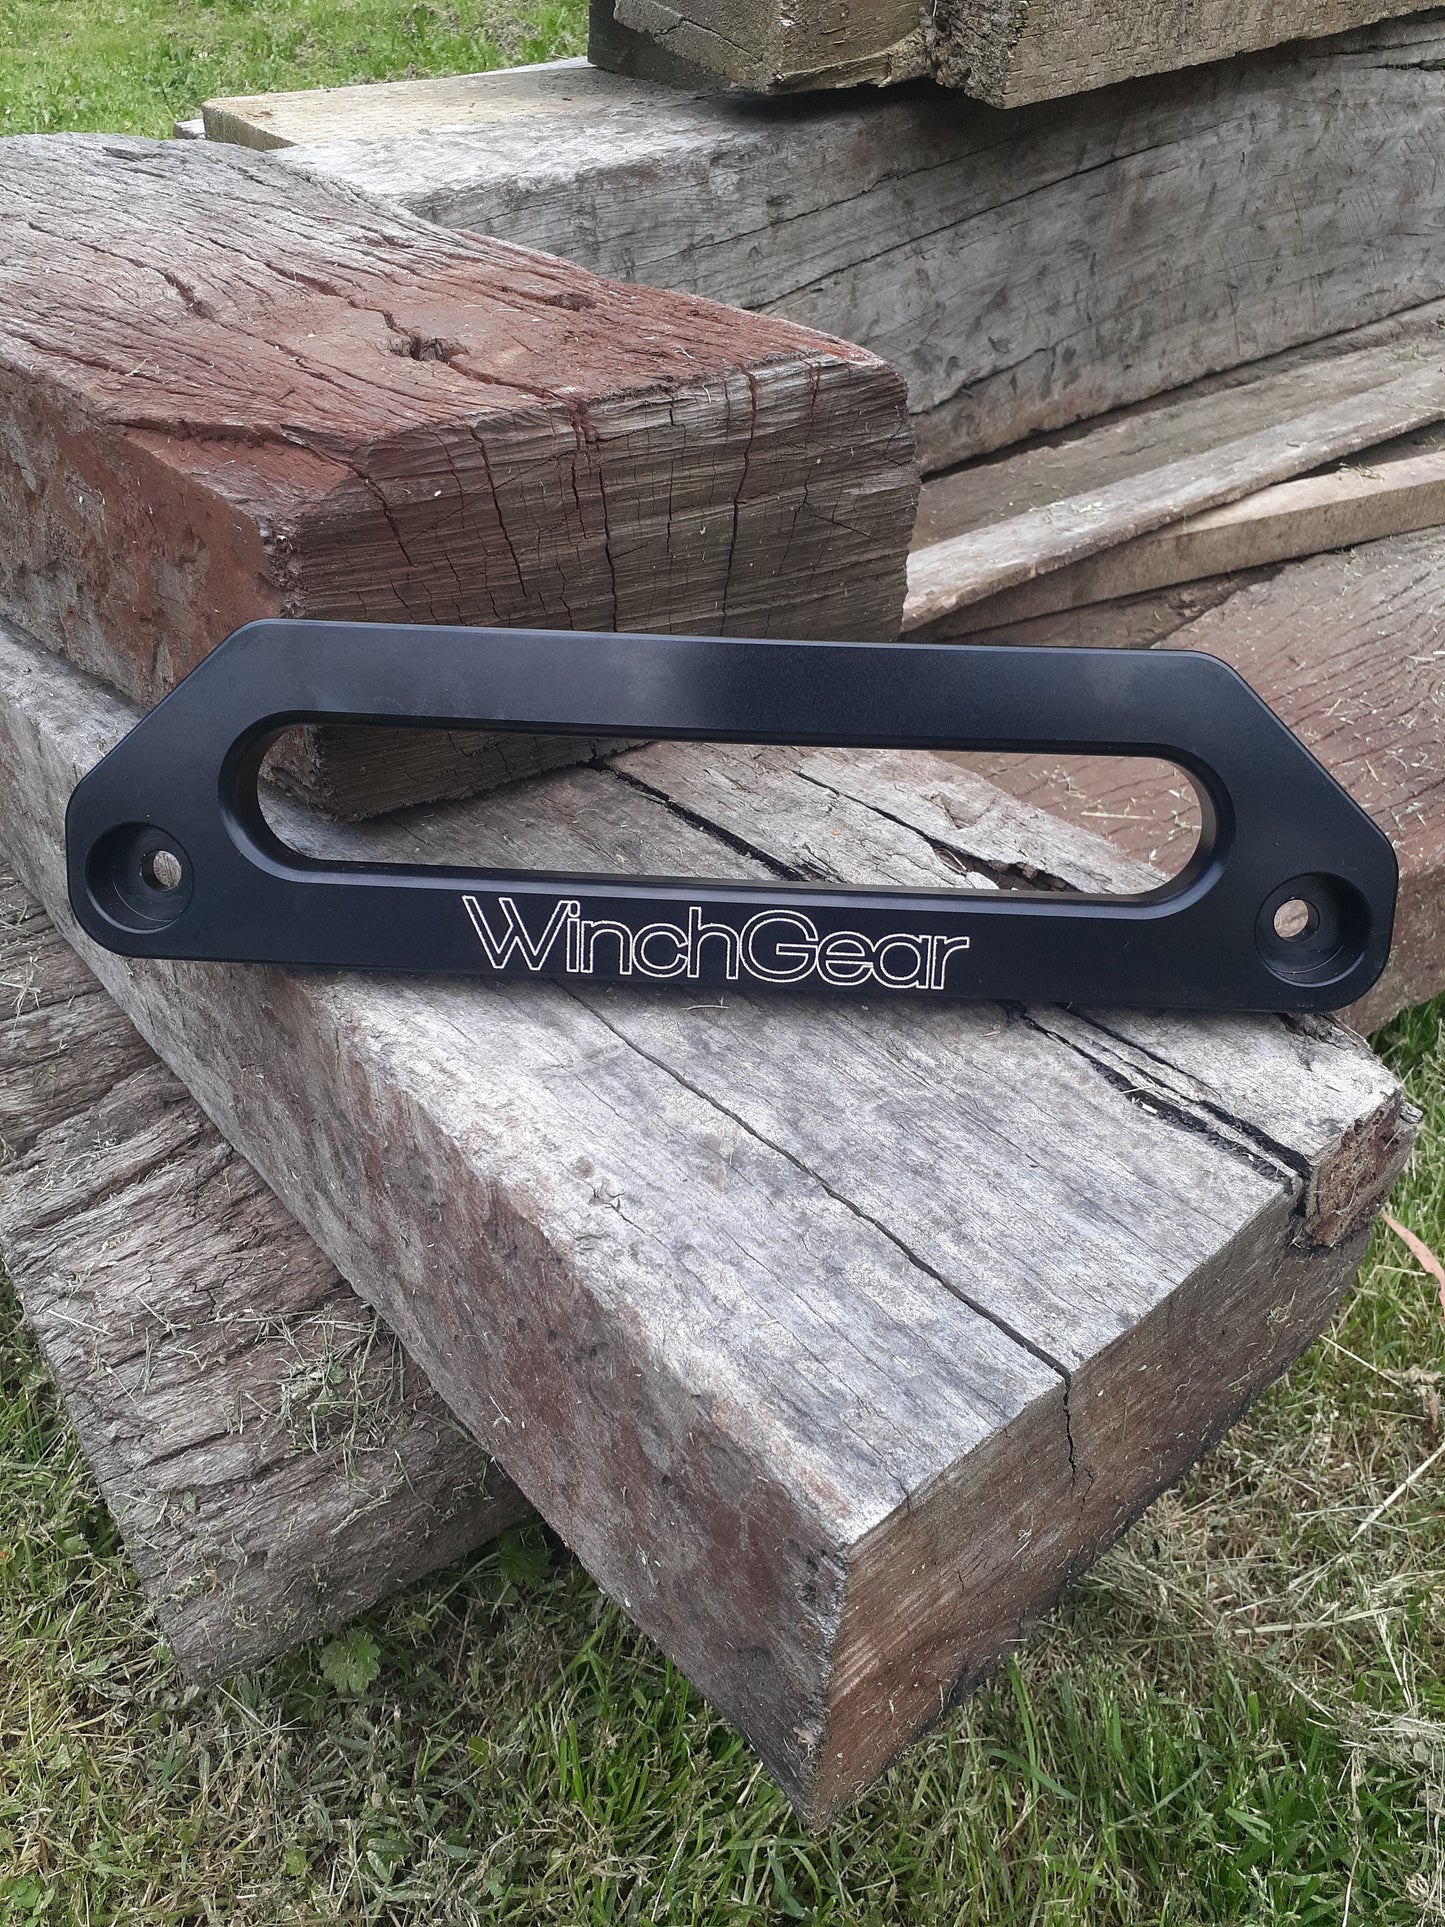 WinchGear +76mm air freespool drum, rope and fairlead combo: